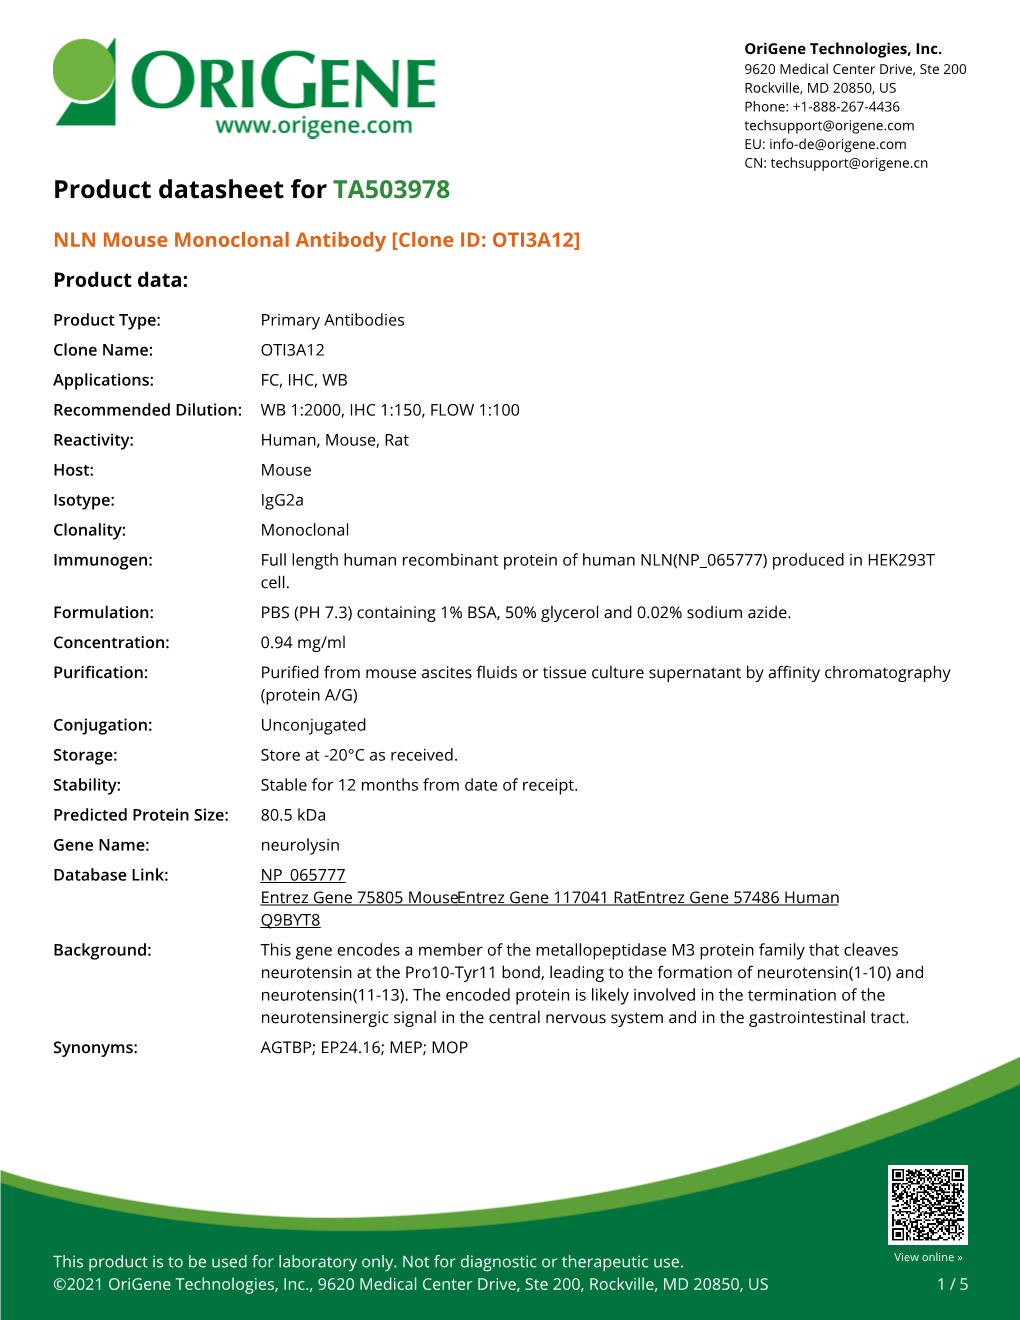 NLN Mouse Monoclonal Antibody [Clone ID: OTI3A12] Product Data